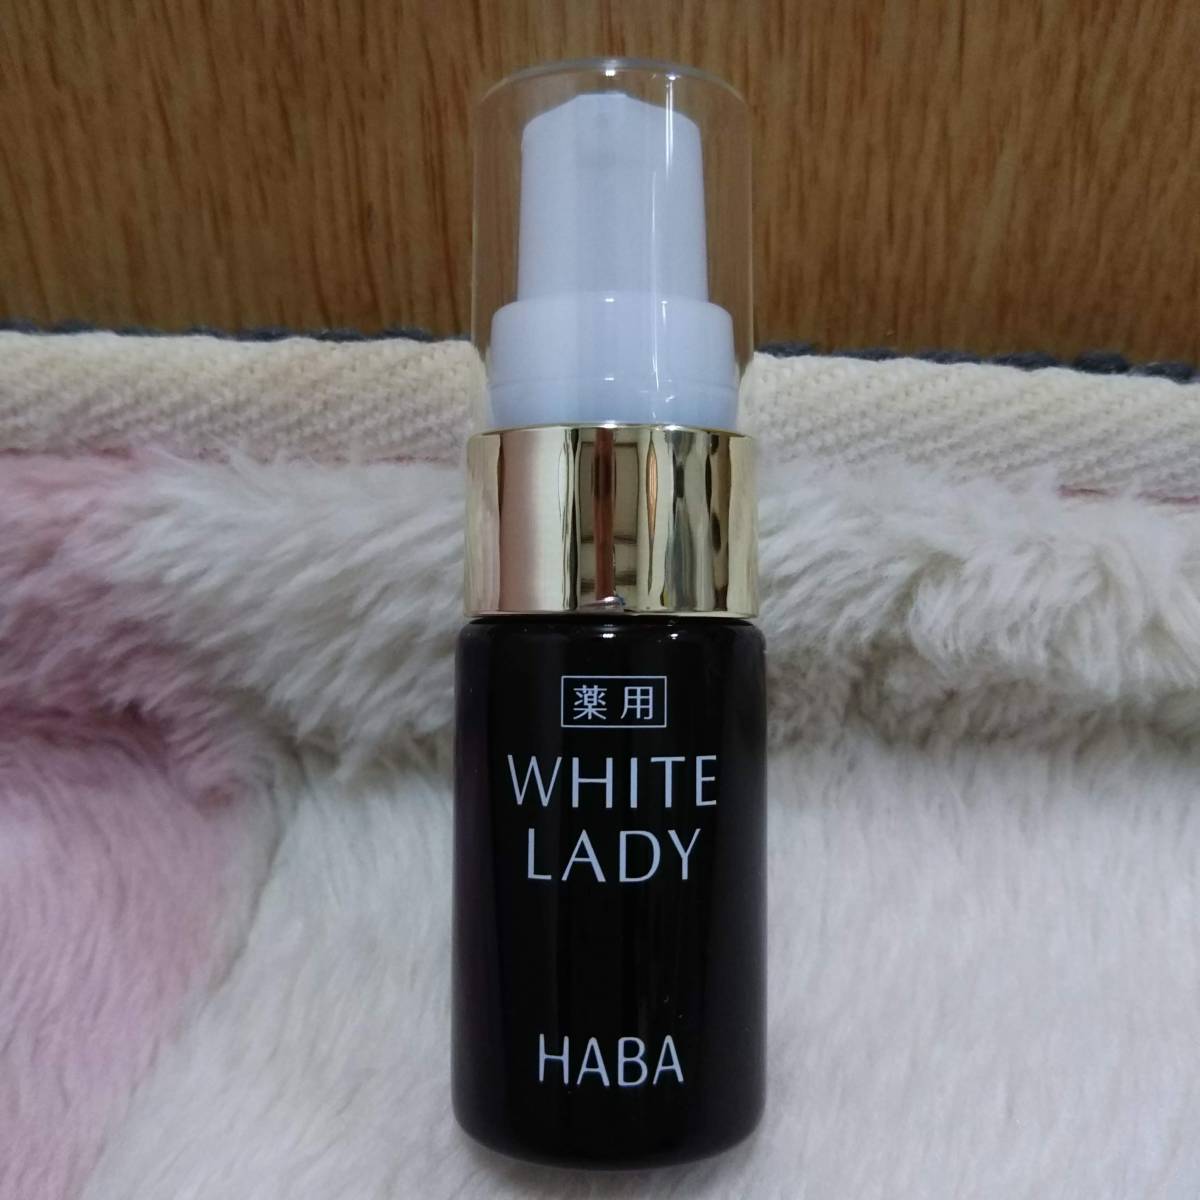 【HABA ハーバー】 『薬用美白美容液 ホワイトレディ』 「８ml」 １本♪♪♪ 美顔♪♪♪ (#^.^#)♪♪♪ ルンルン(人´3｀*)～♪_画像2